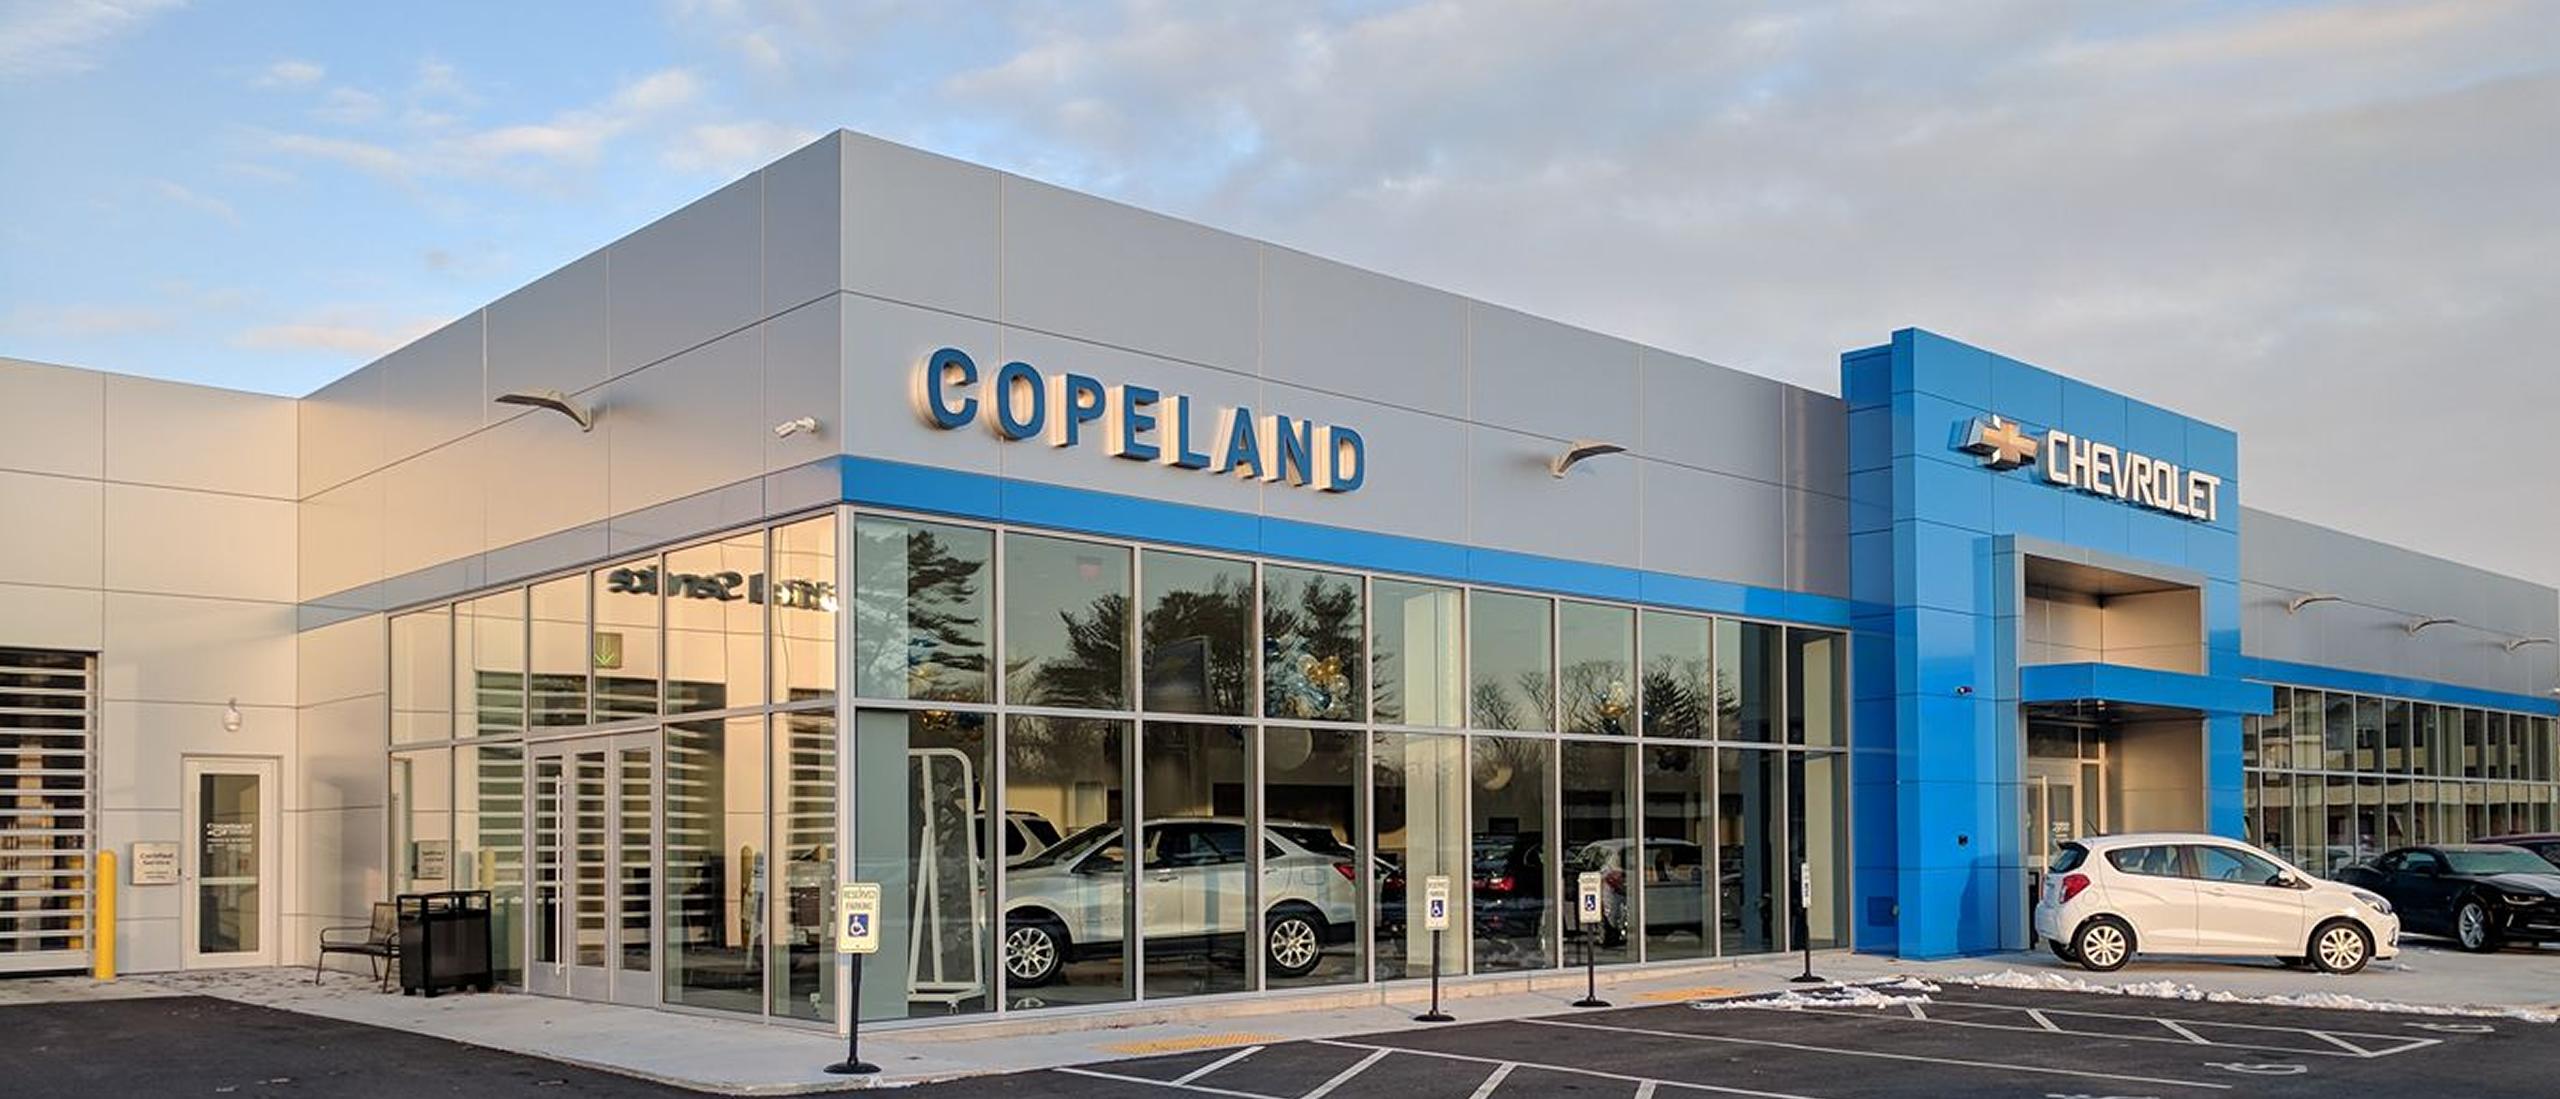 Copeland Chevrolet - Dealership Front